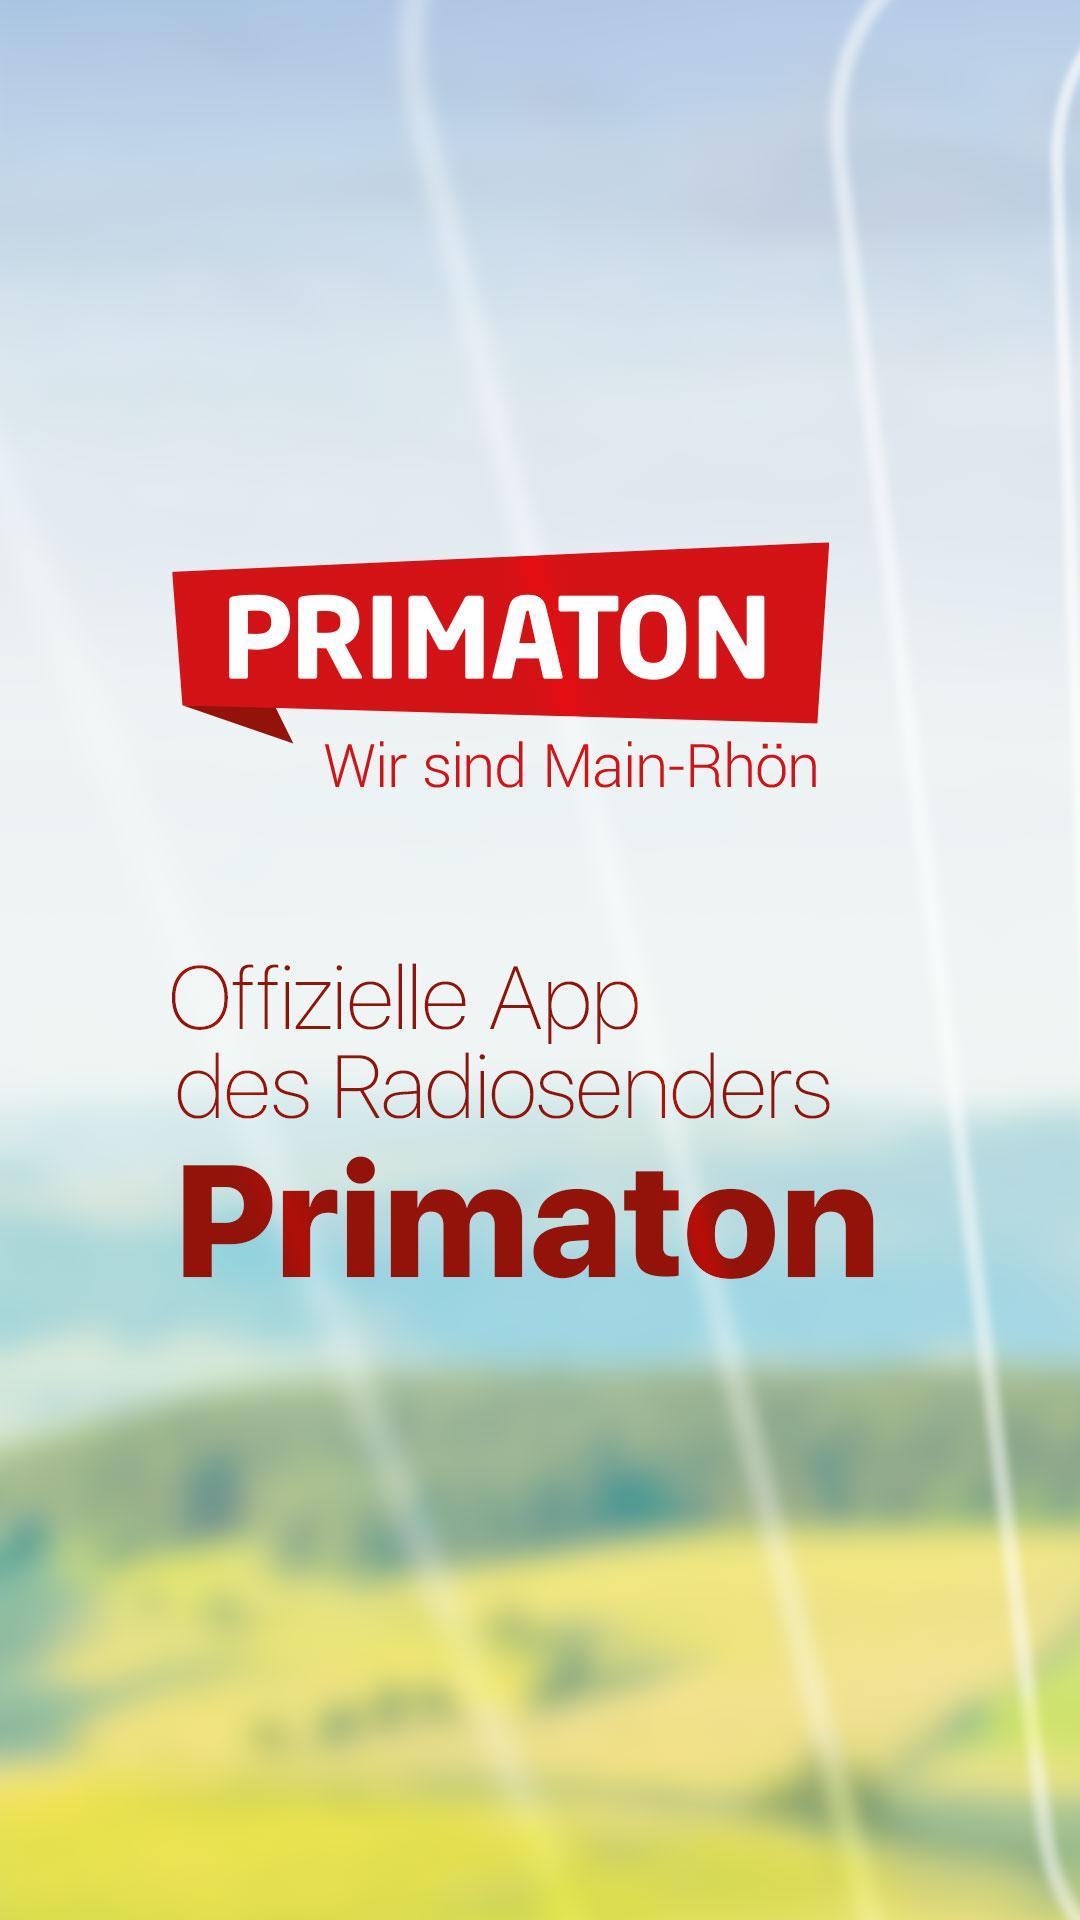 Radio Primaton for Android - APK Download